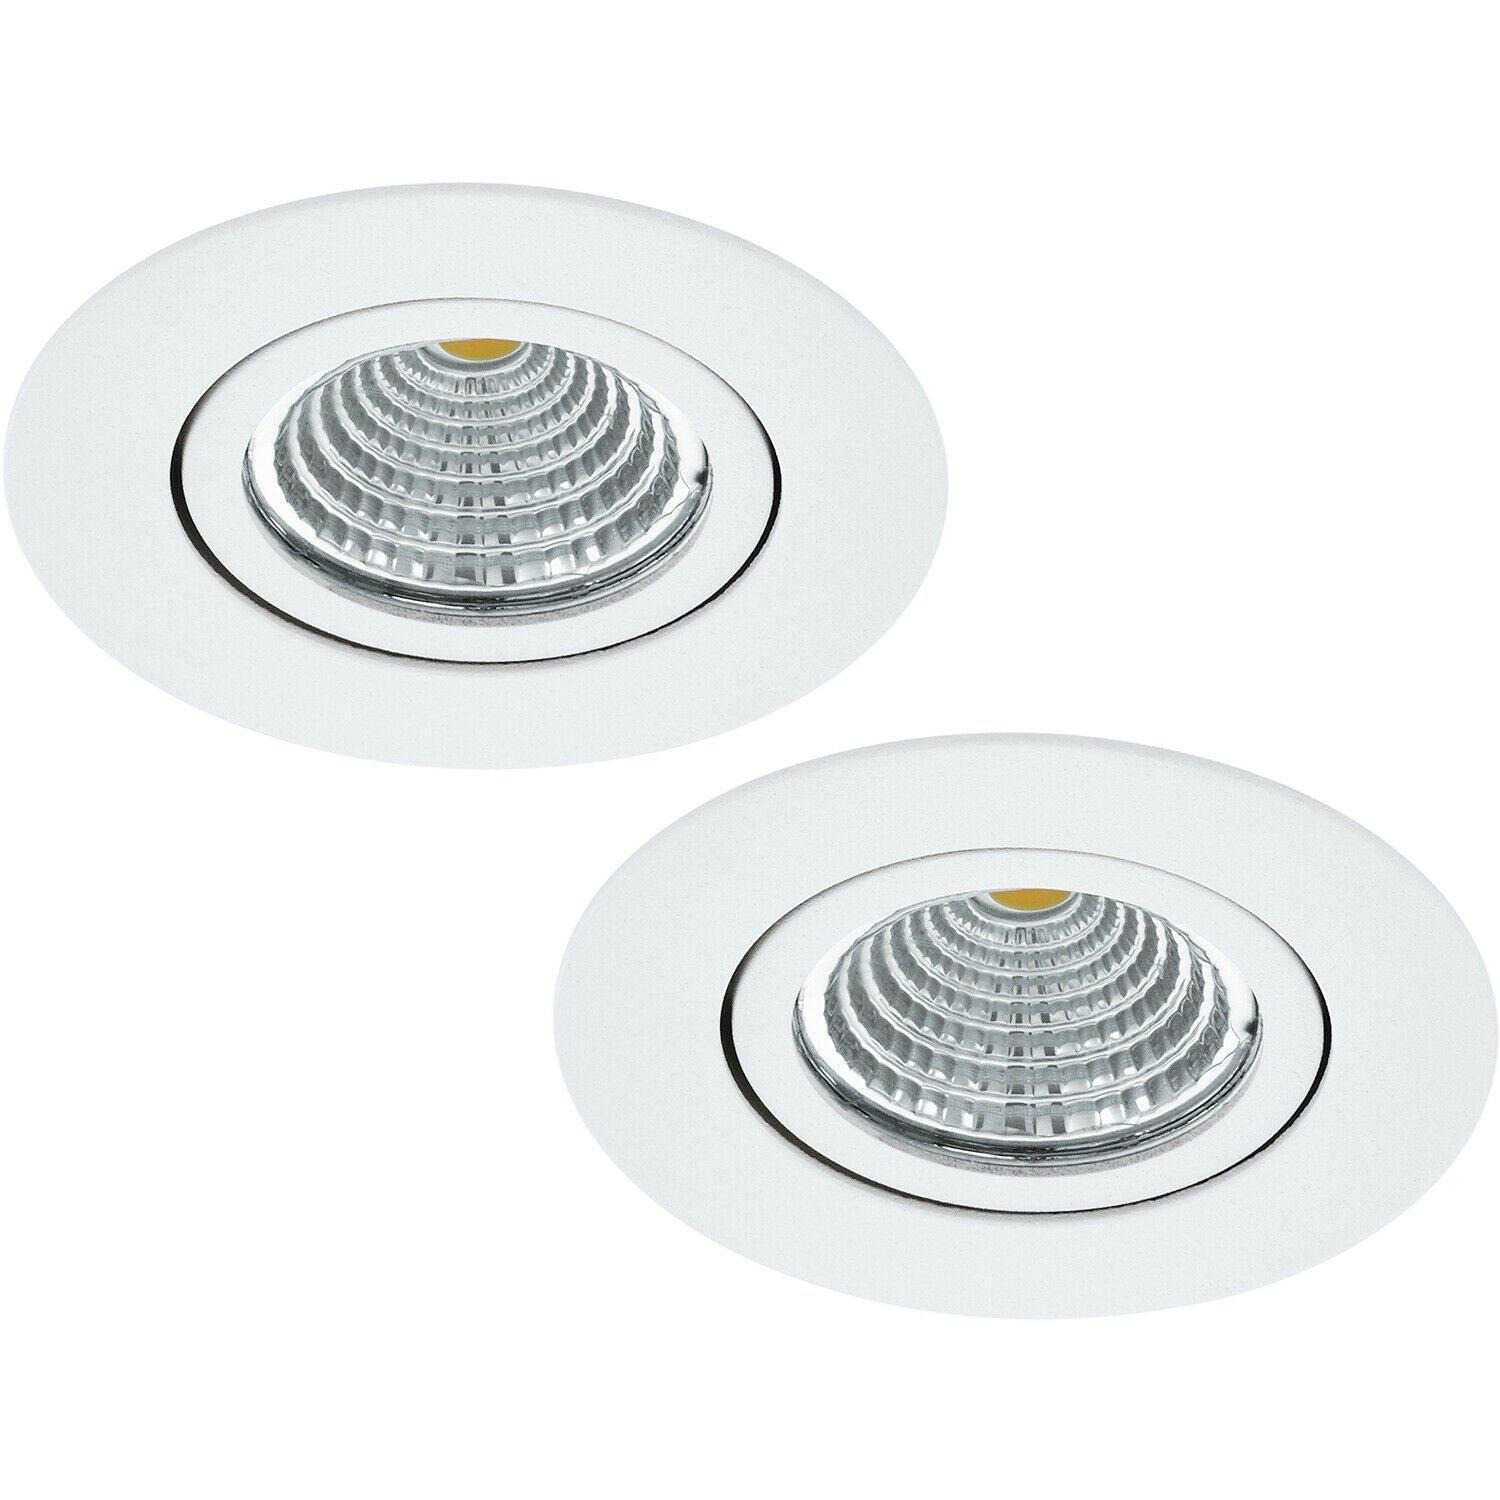 2 PACK Wall / Ceiling Flush Downlight White Recess Spotlight 6W Built in LED - image 1